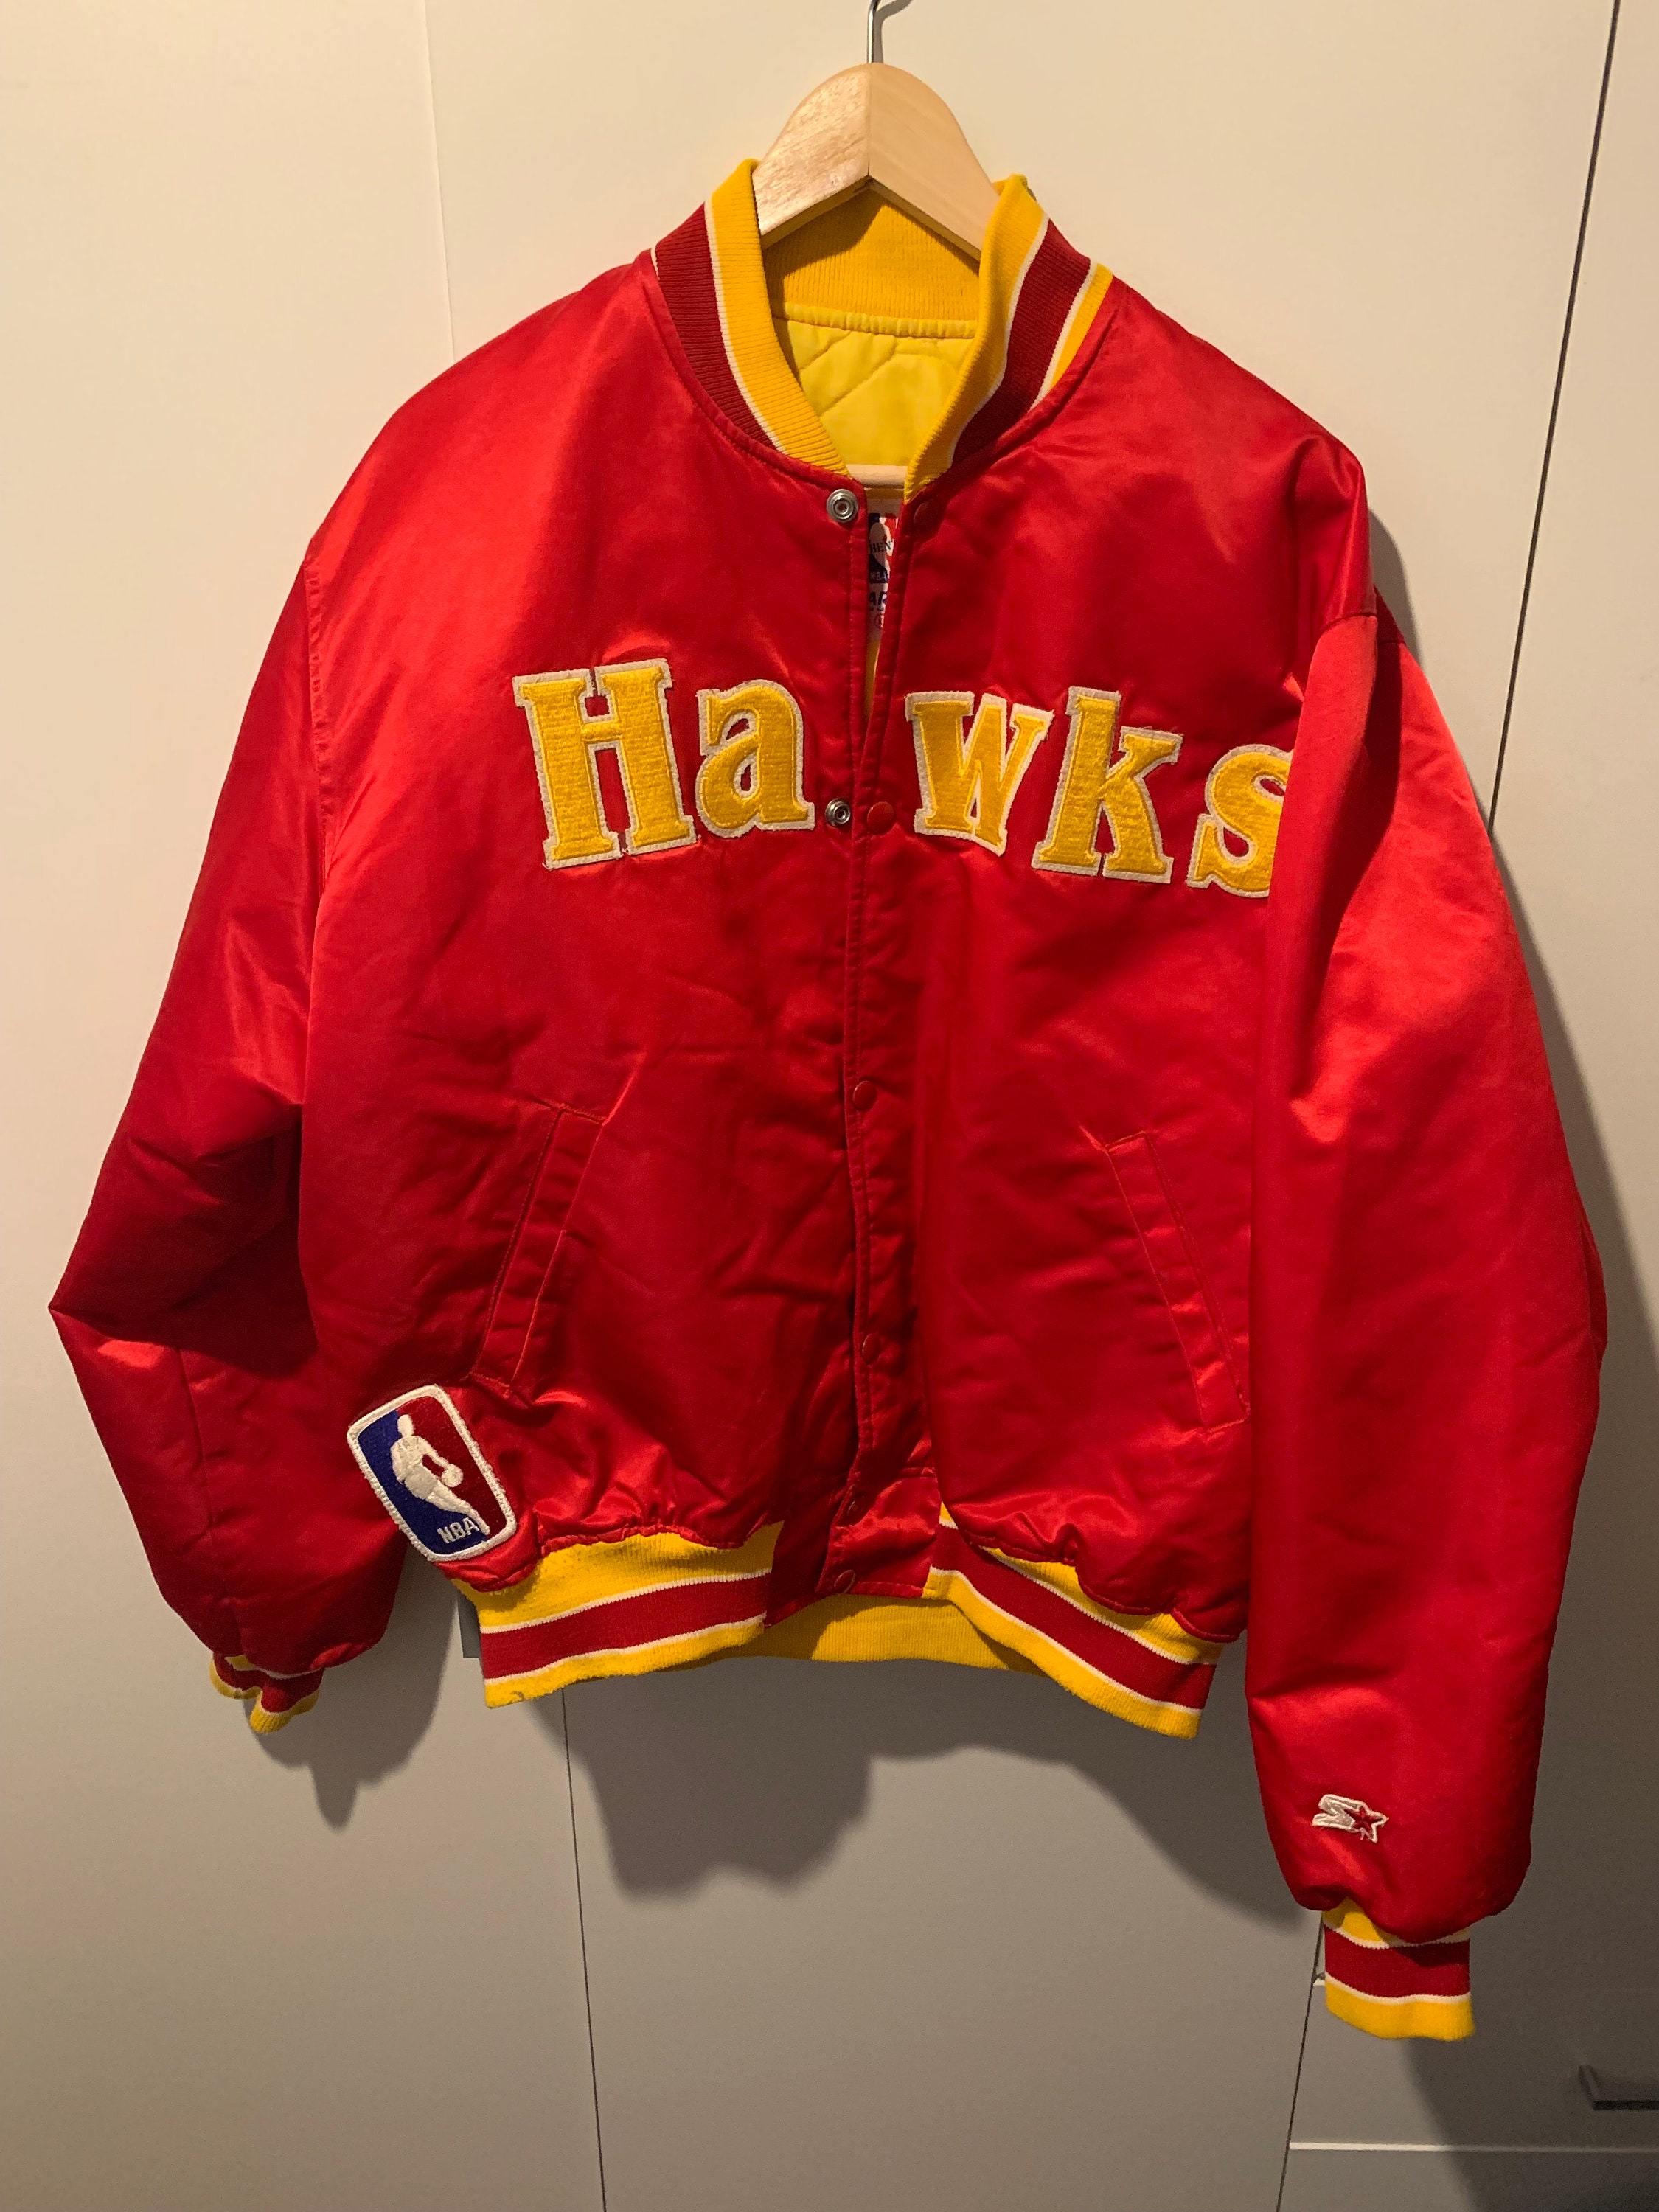 Atlanta Hawks Red and White Bomber Satin Jacket